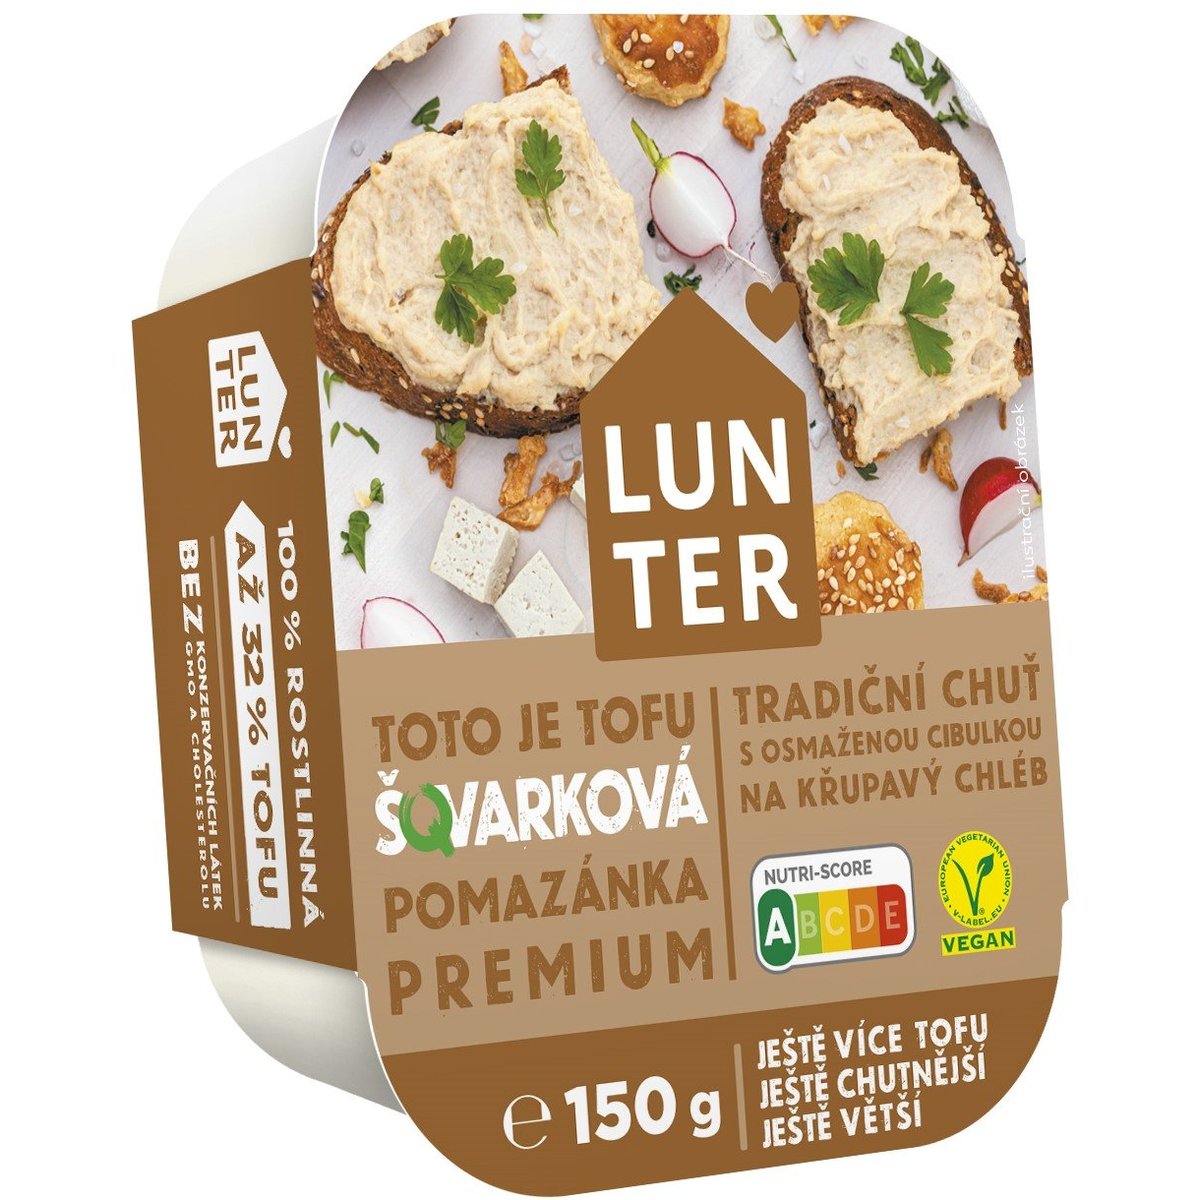 Lunter Šqvarková rostlinná pomazánka Premium